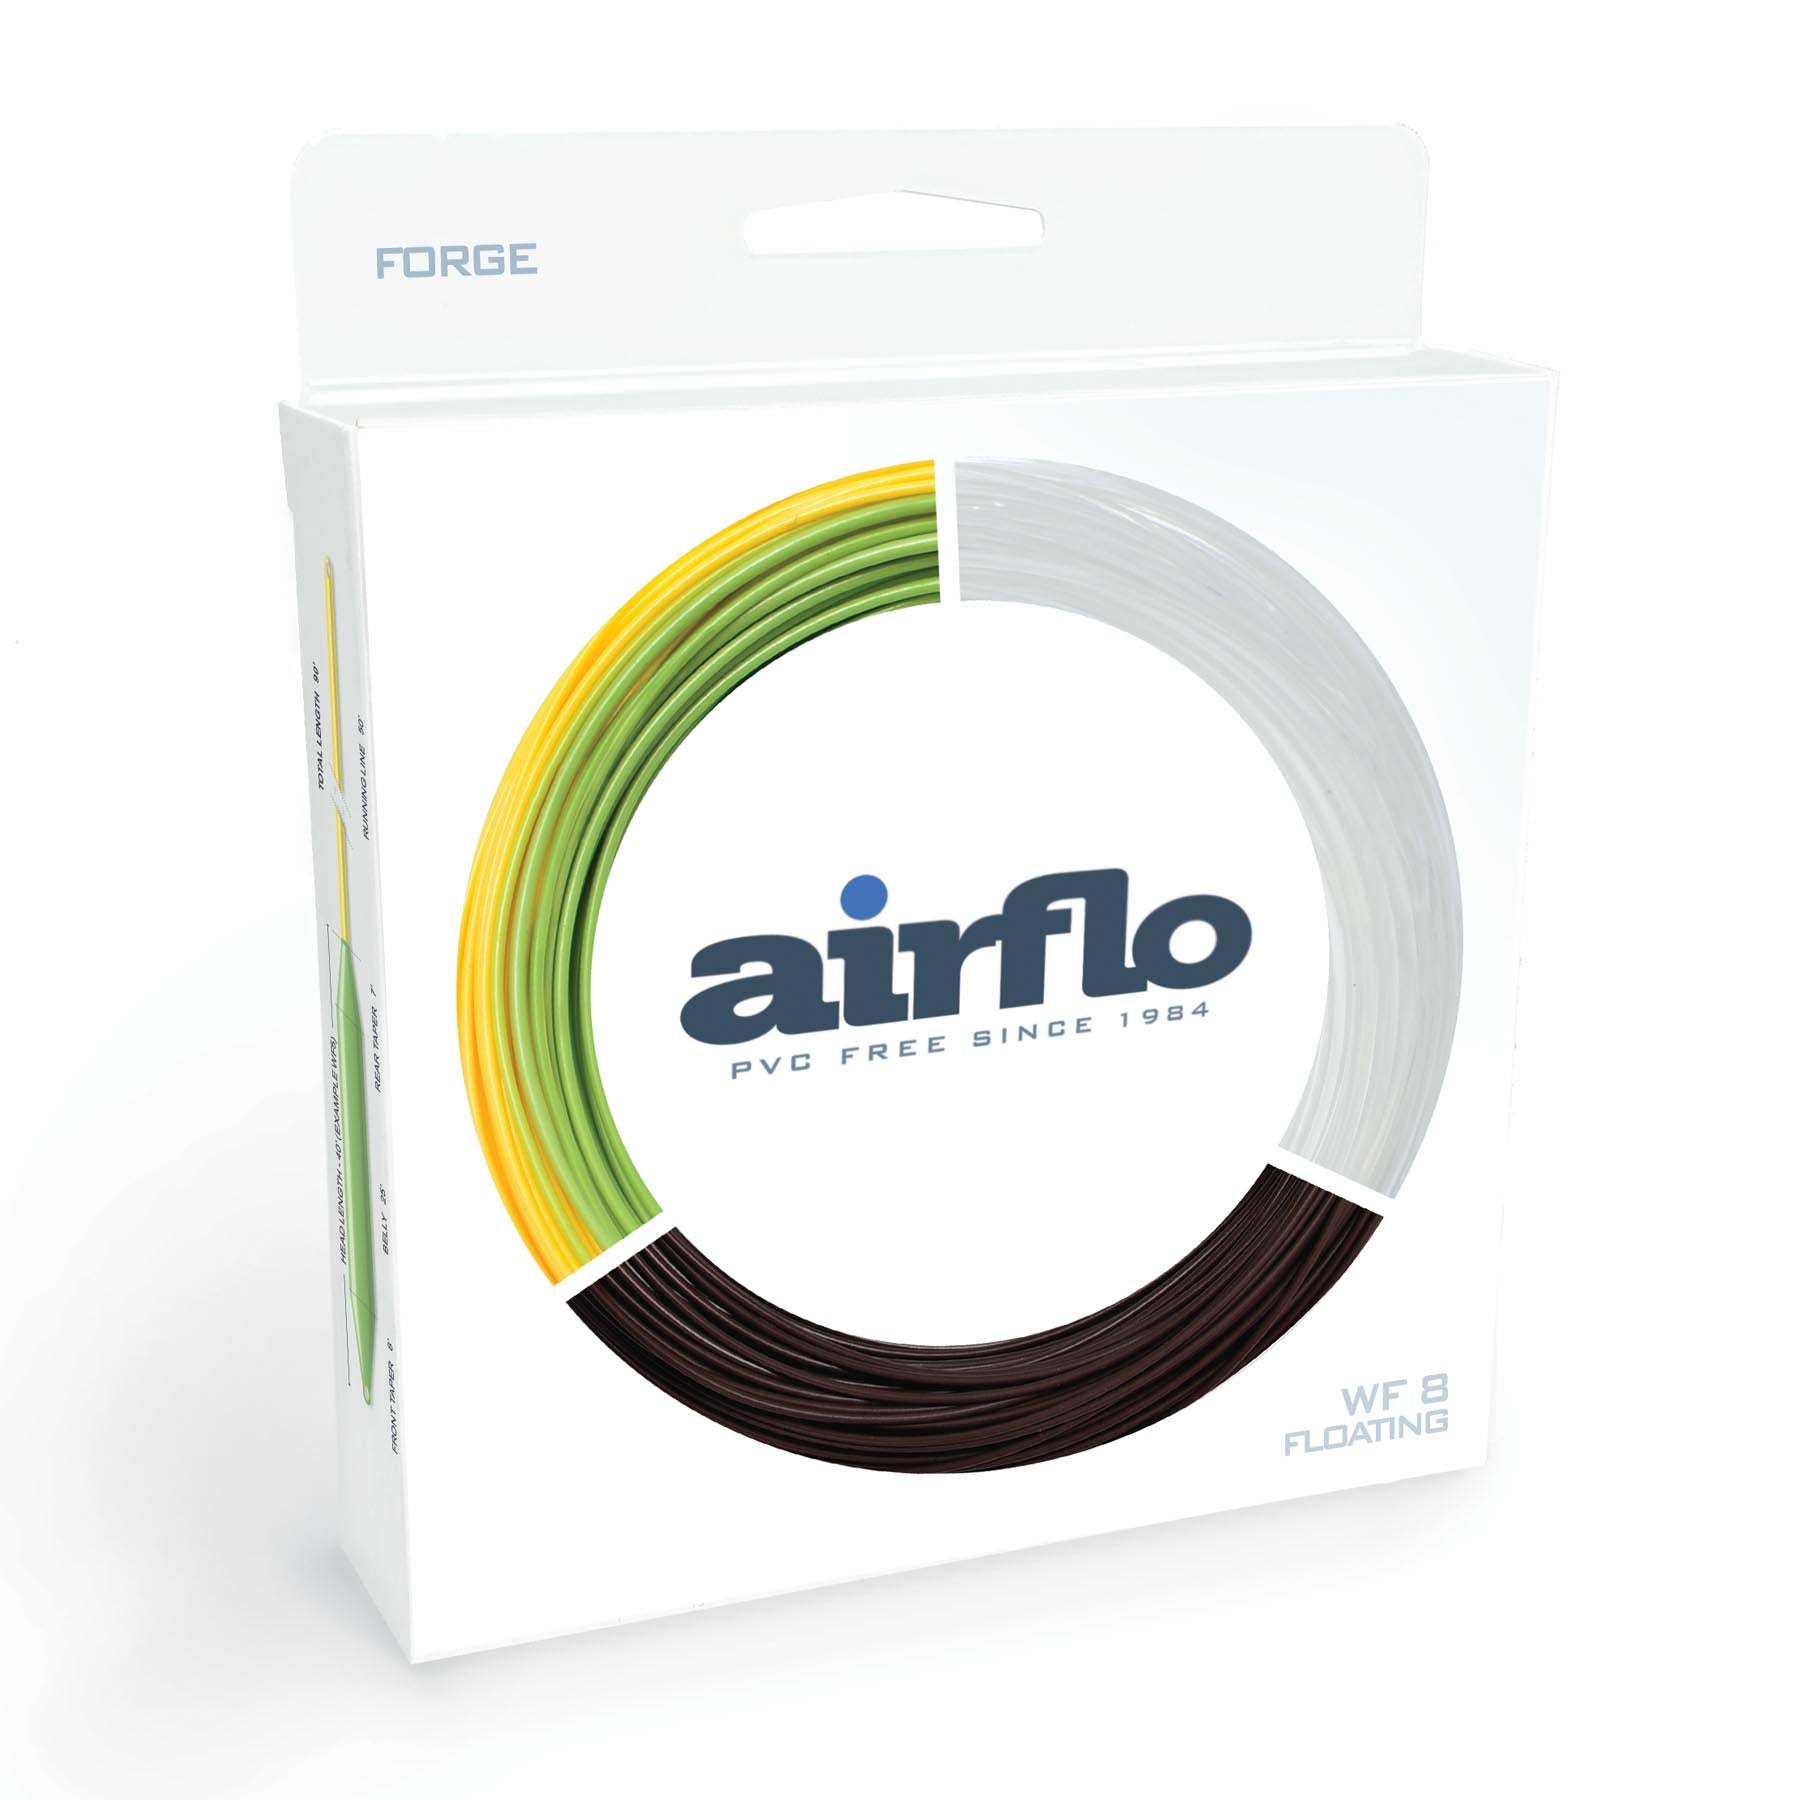 Airflo Superflo Ridge 2.0 Power Taper Fly Line Review – Manic